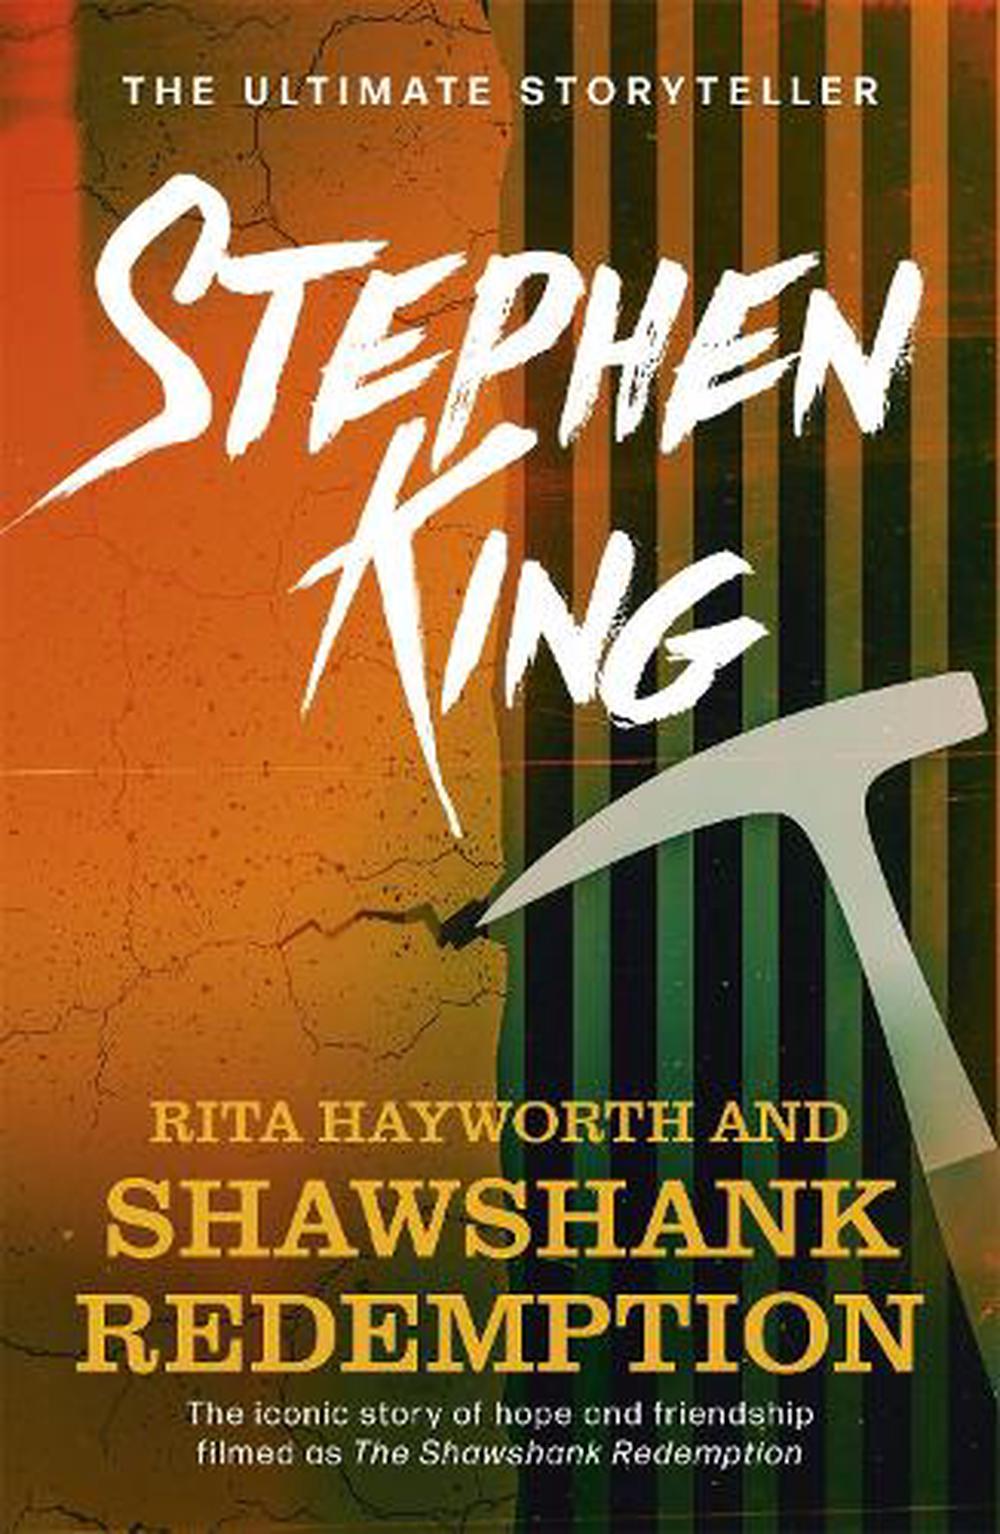 Rita Hayworth and Shawshank Redemption by Stephen King (English) Free